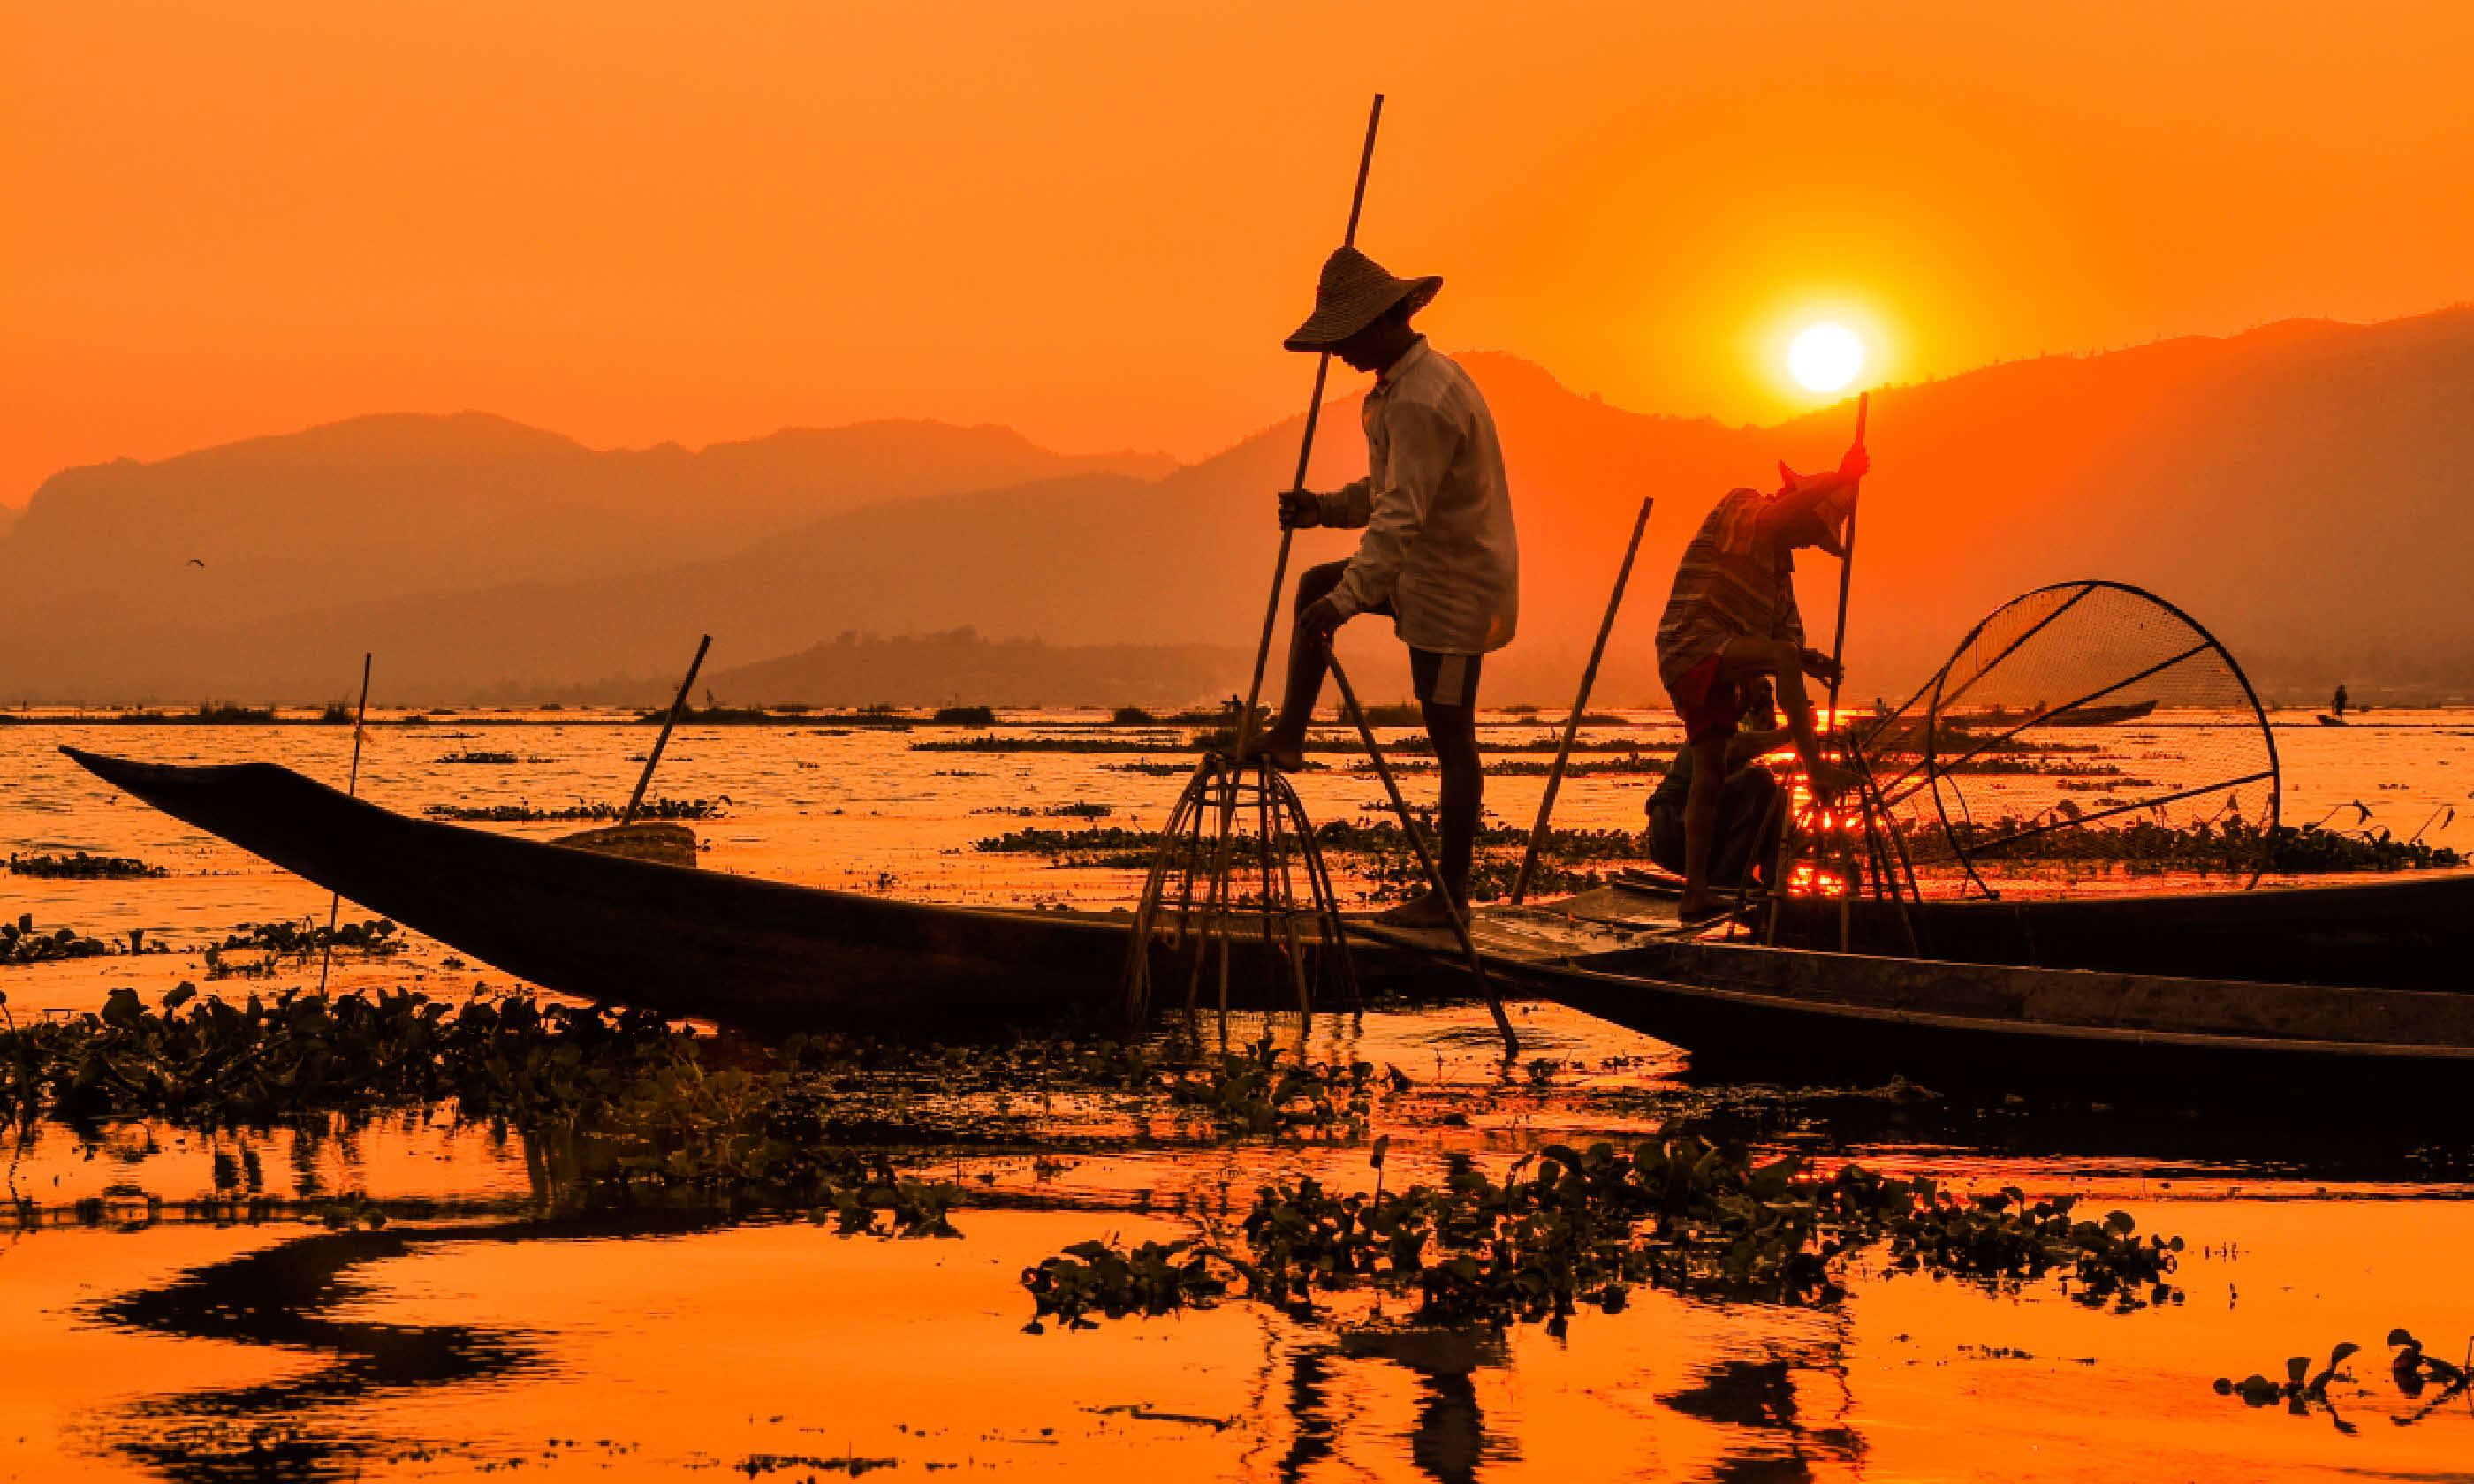 Fishermen in Inle lakes sunset (Shutterstock: see credit below)